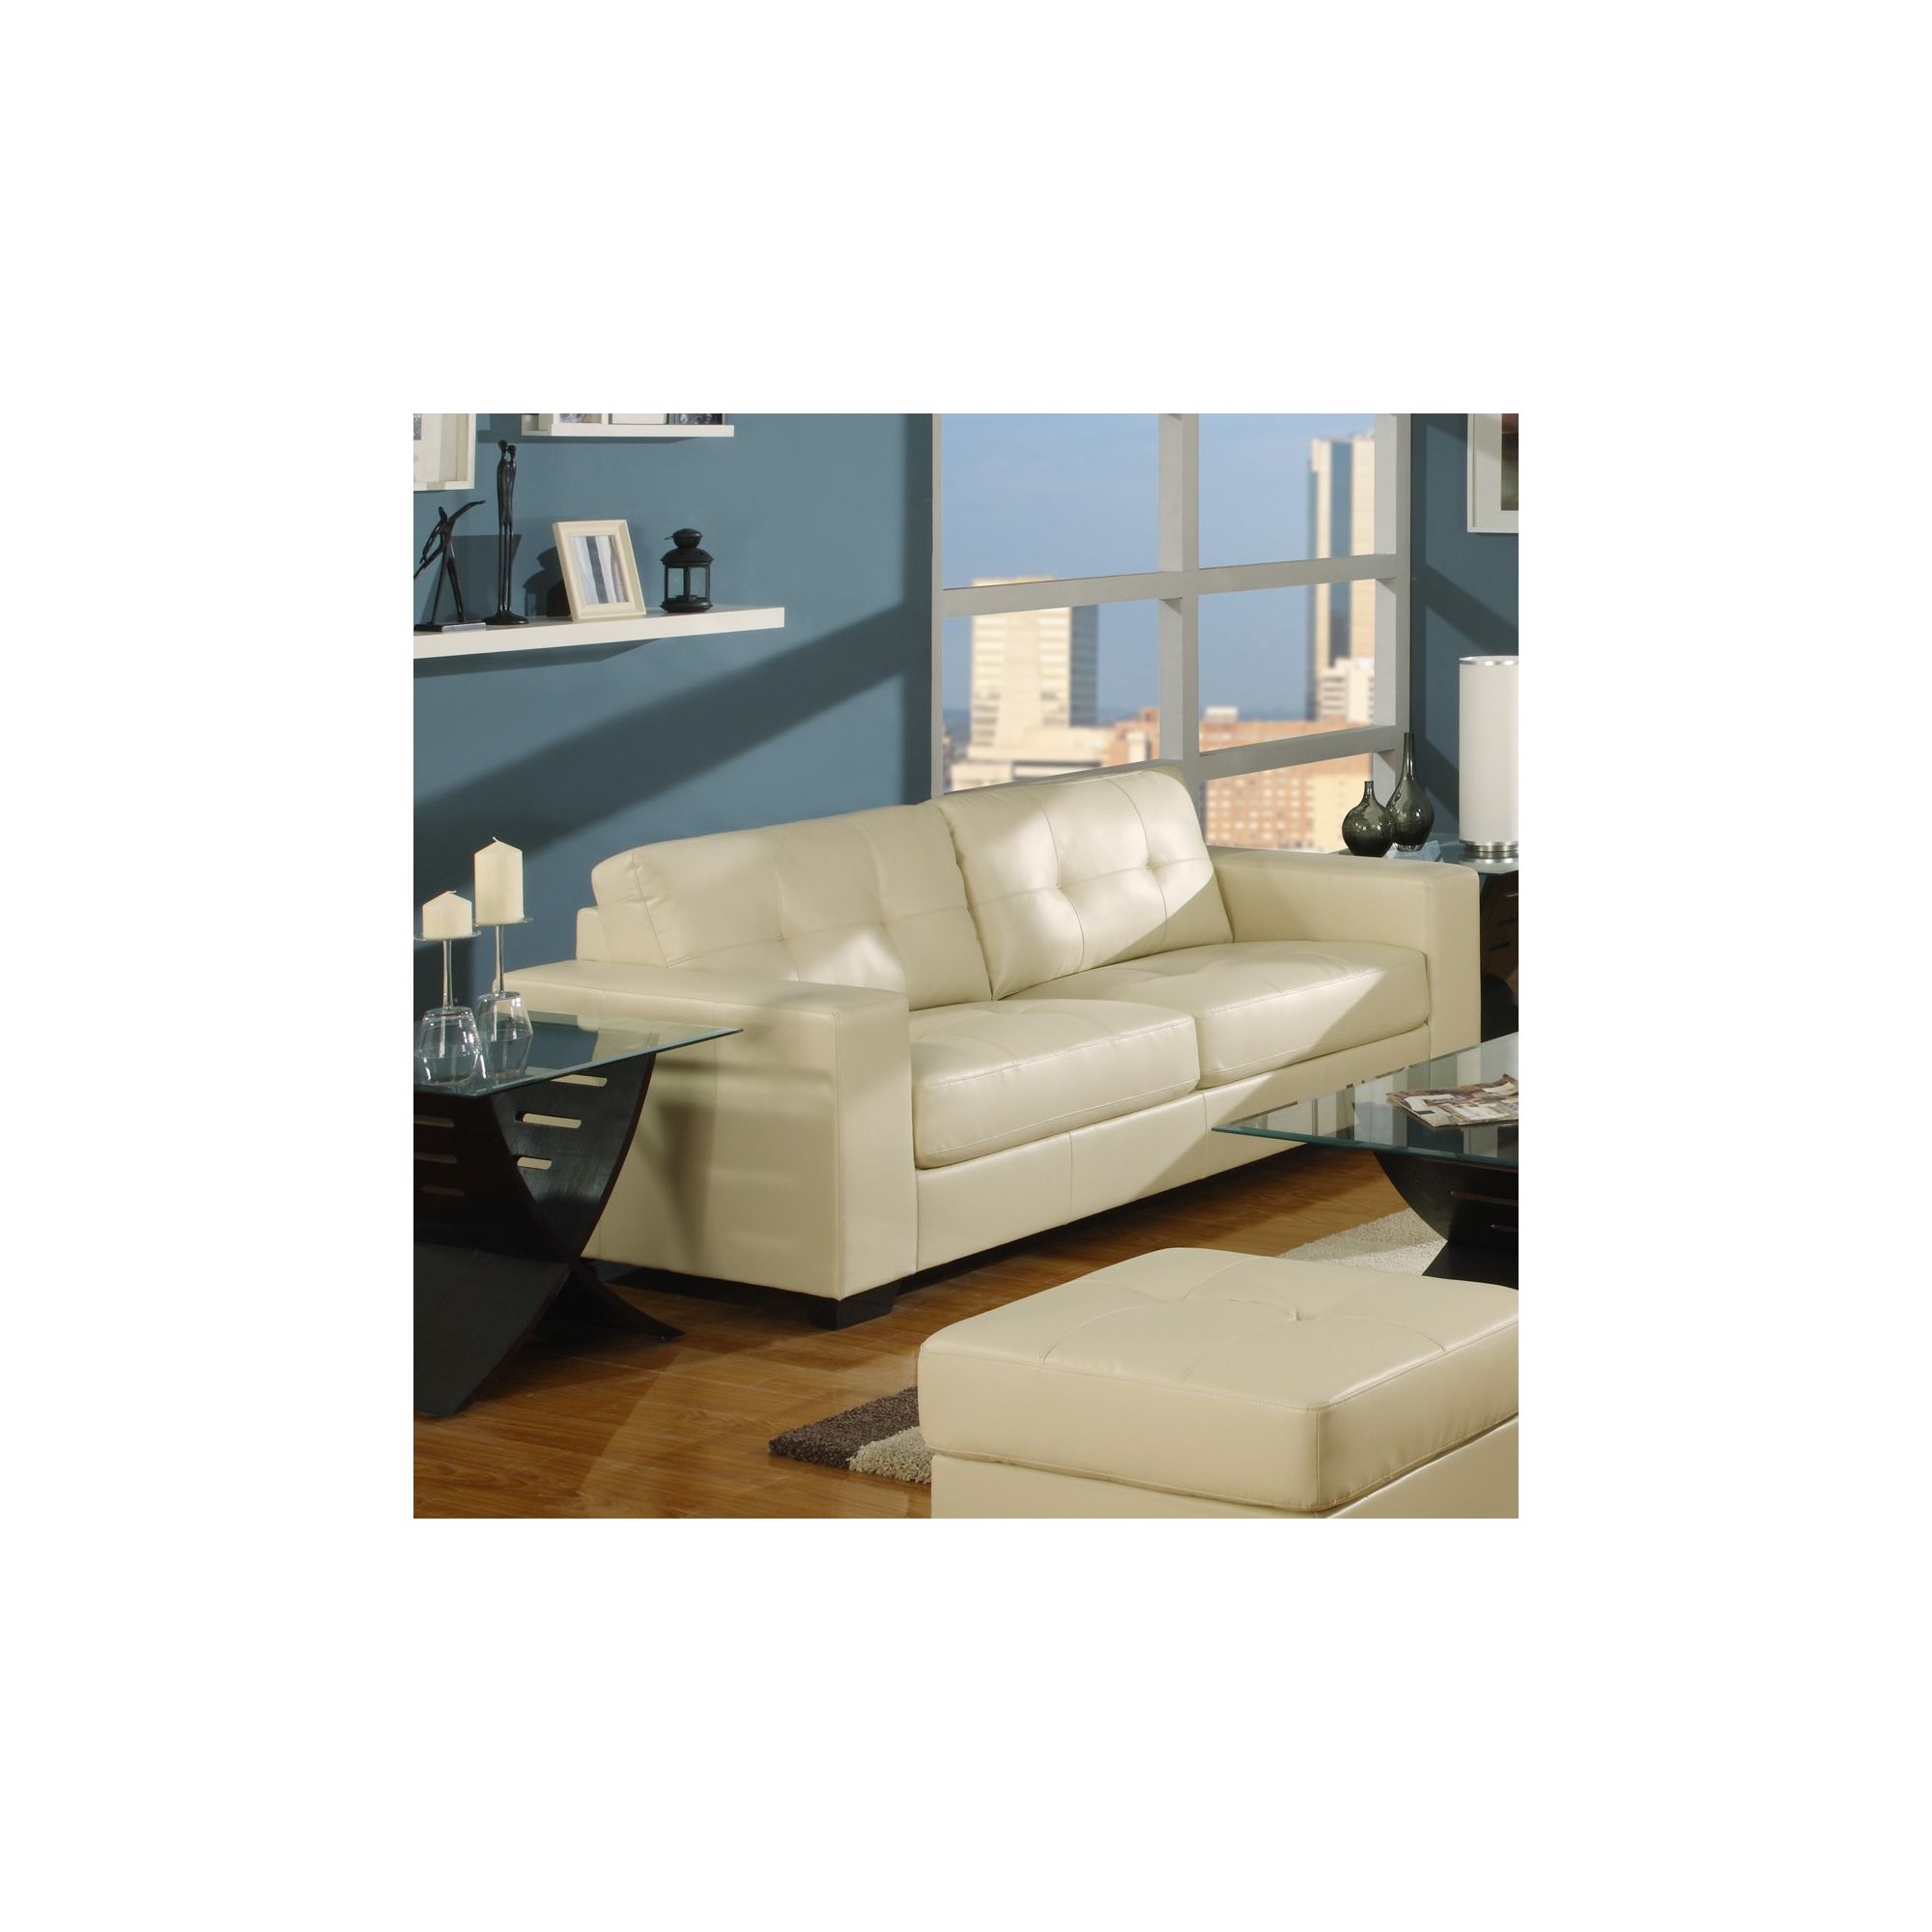 Furniture Link Gemona 3 Seater Sofa - Ivory at Tesco Direct